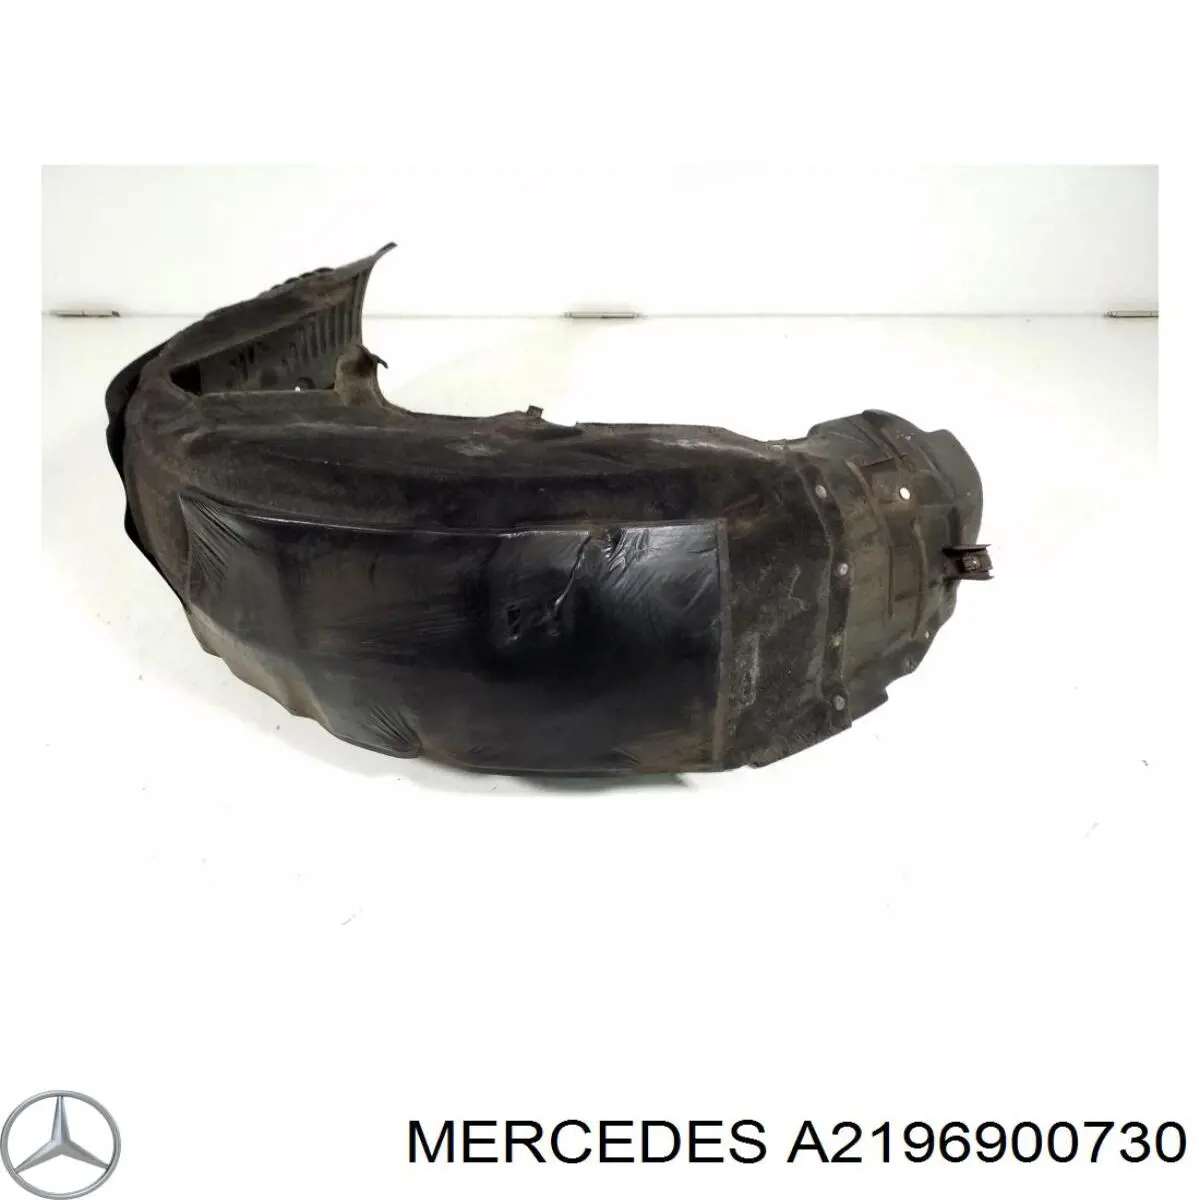 Revestimiento, pasarrueda trasera, izquierdo para Mercedes CLS (C219)